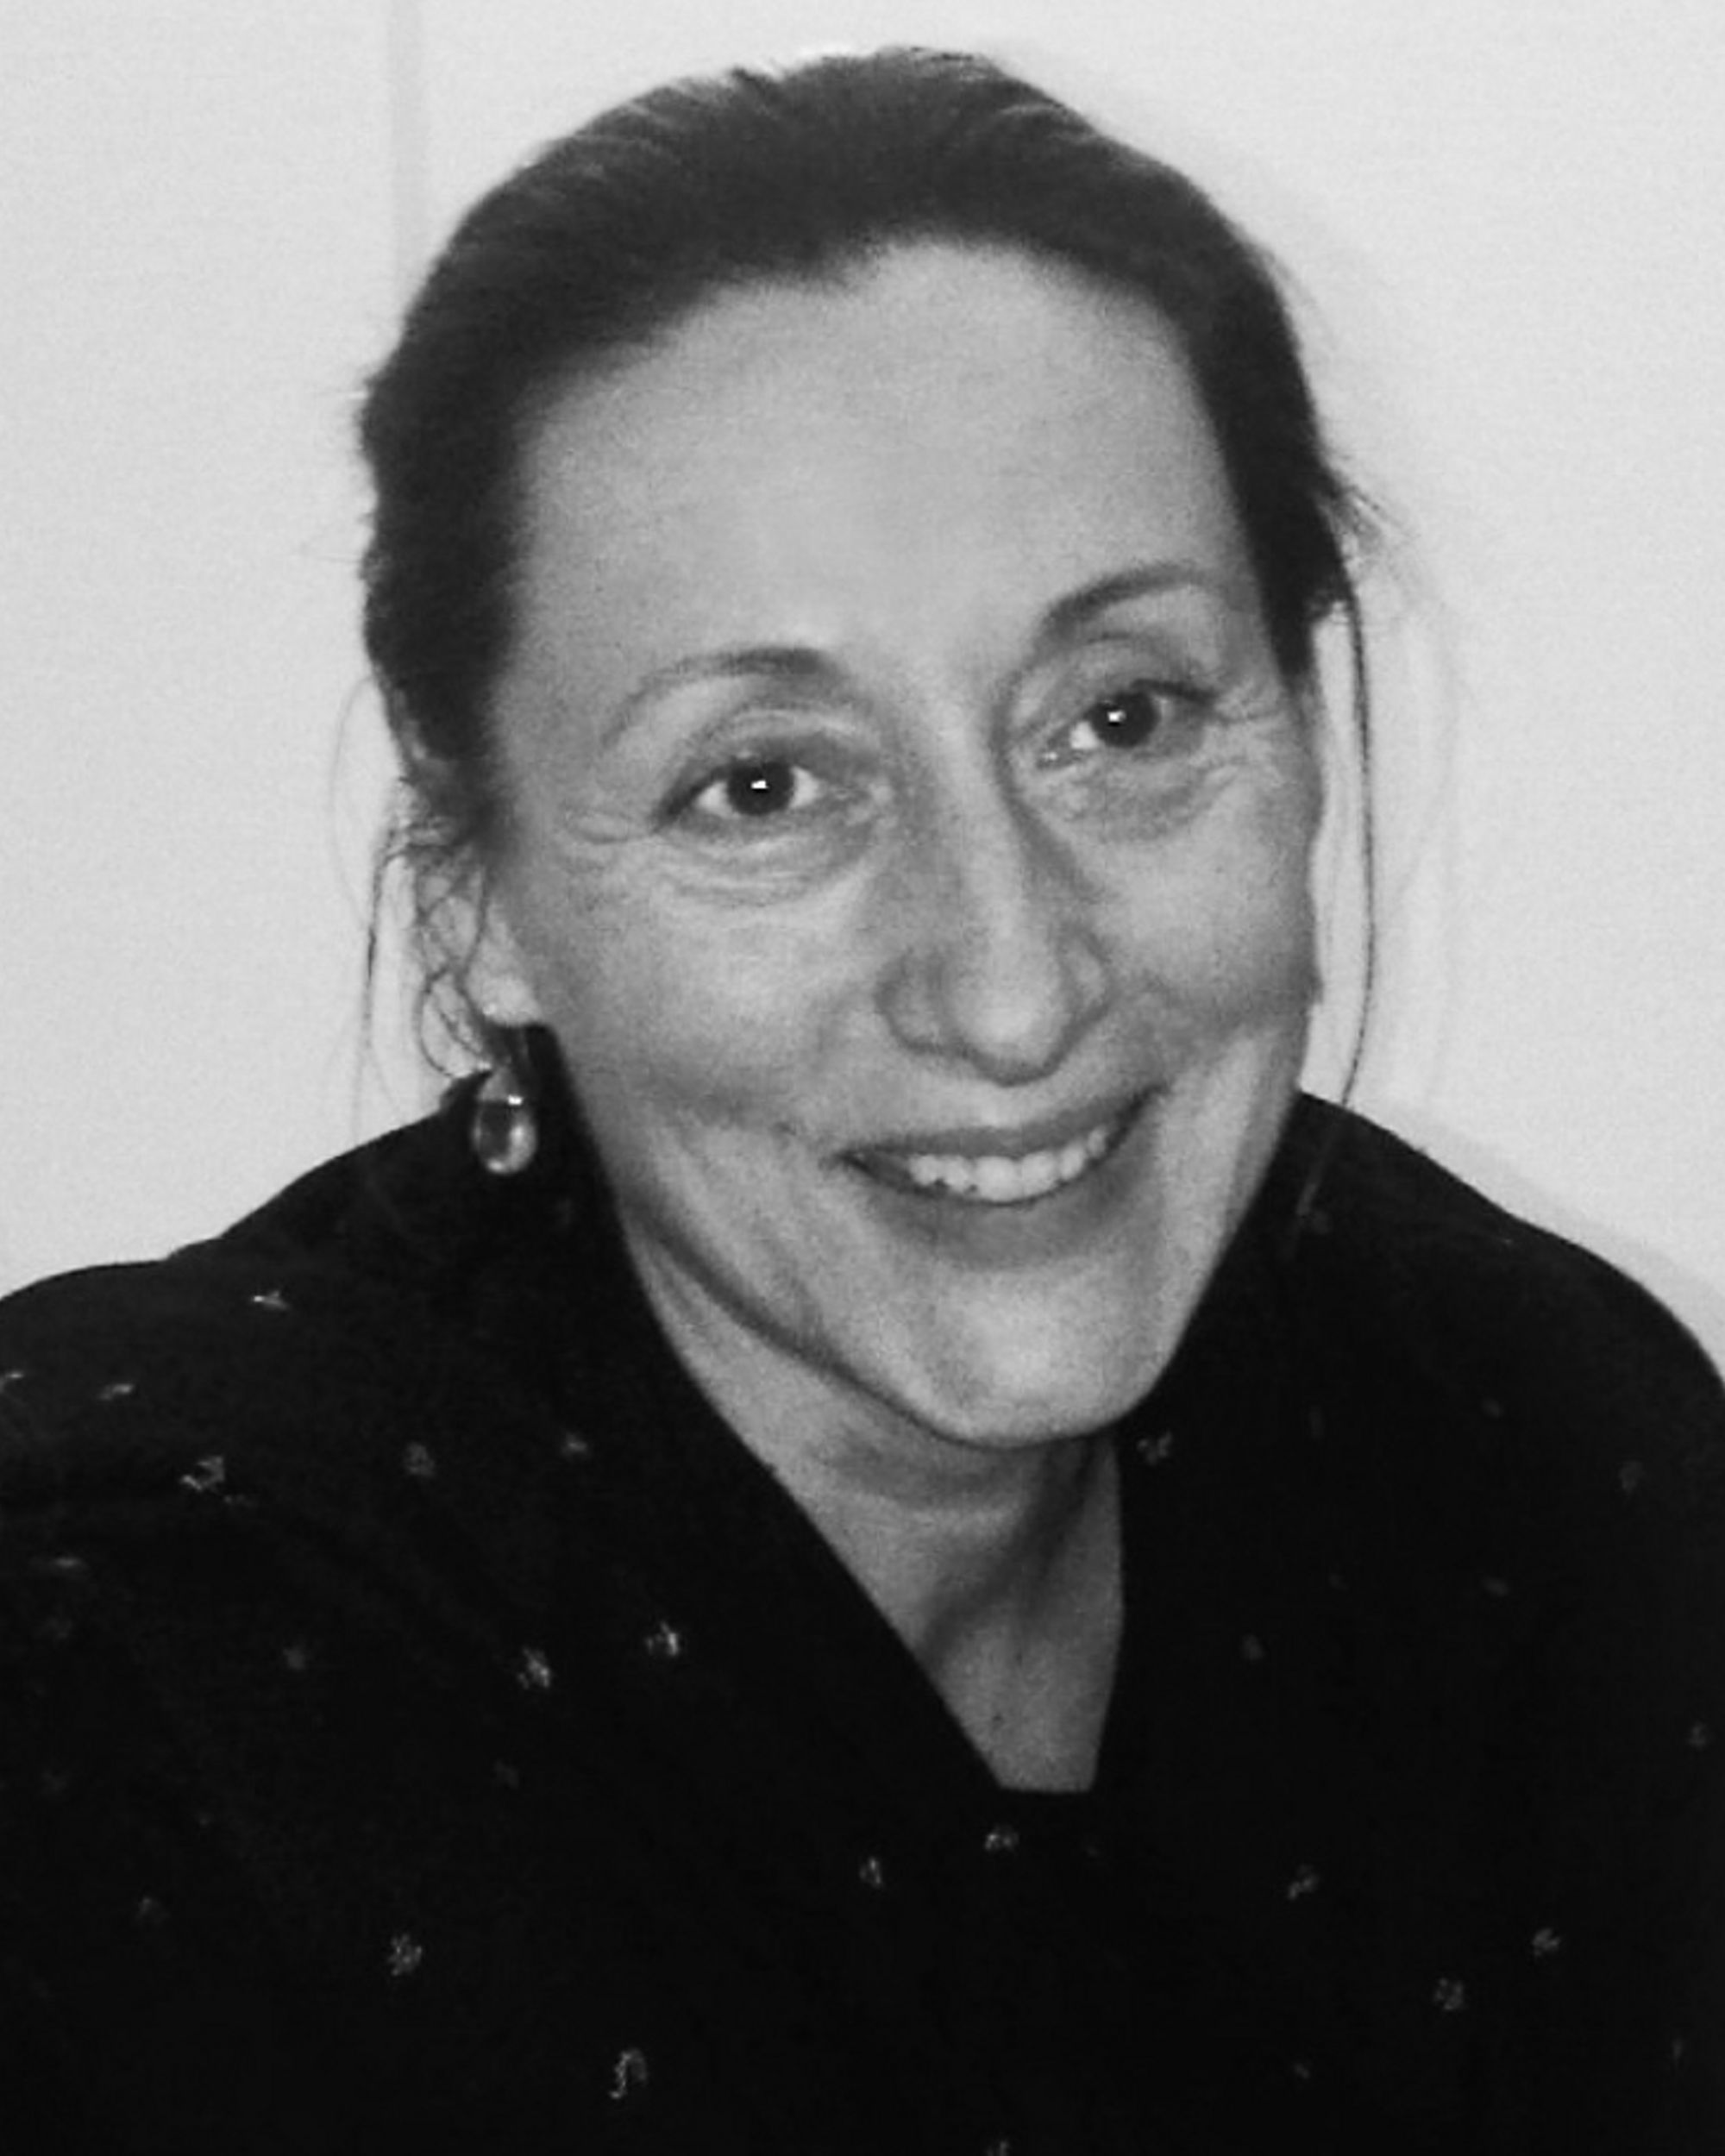 Vera Lutter